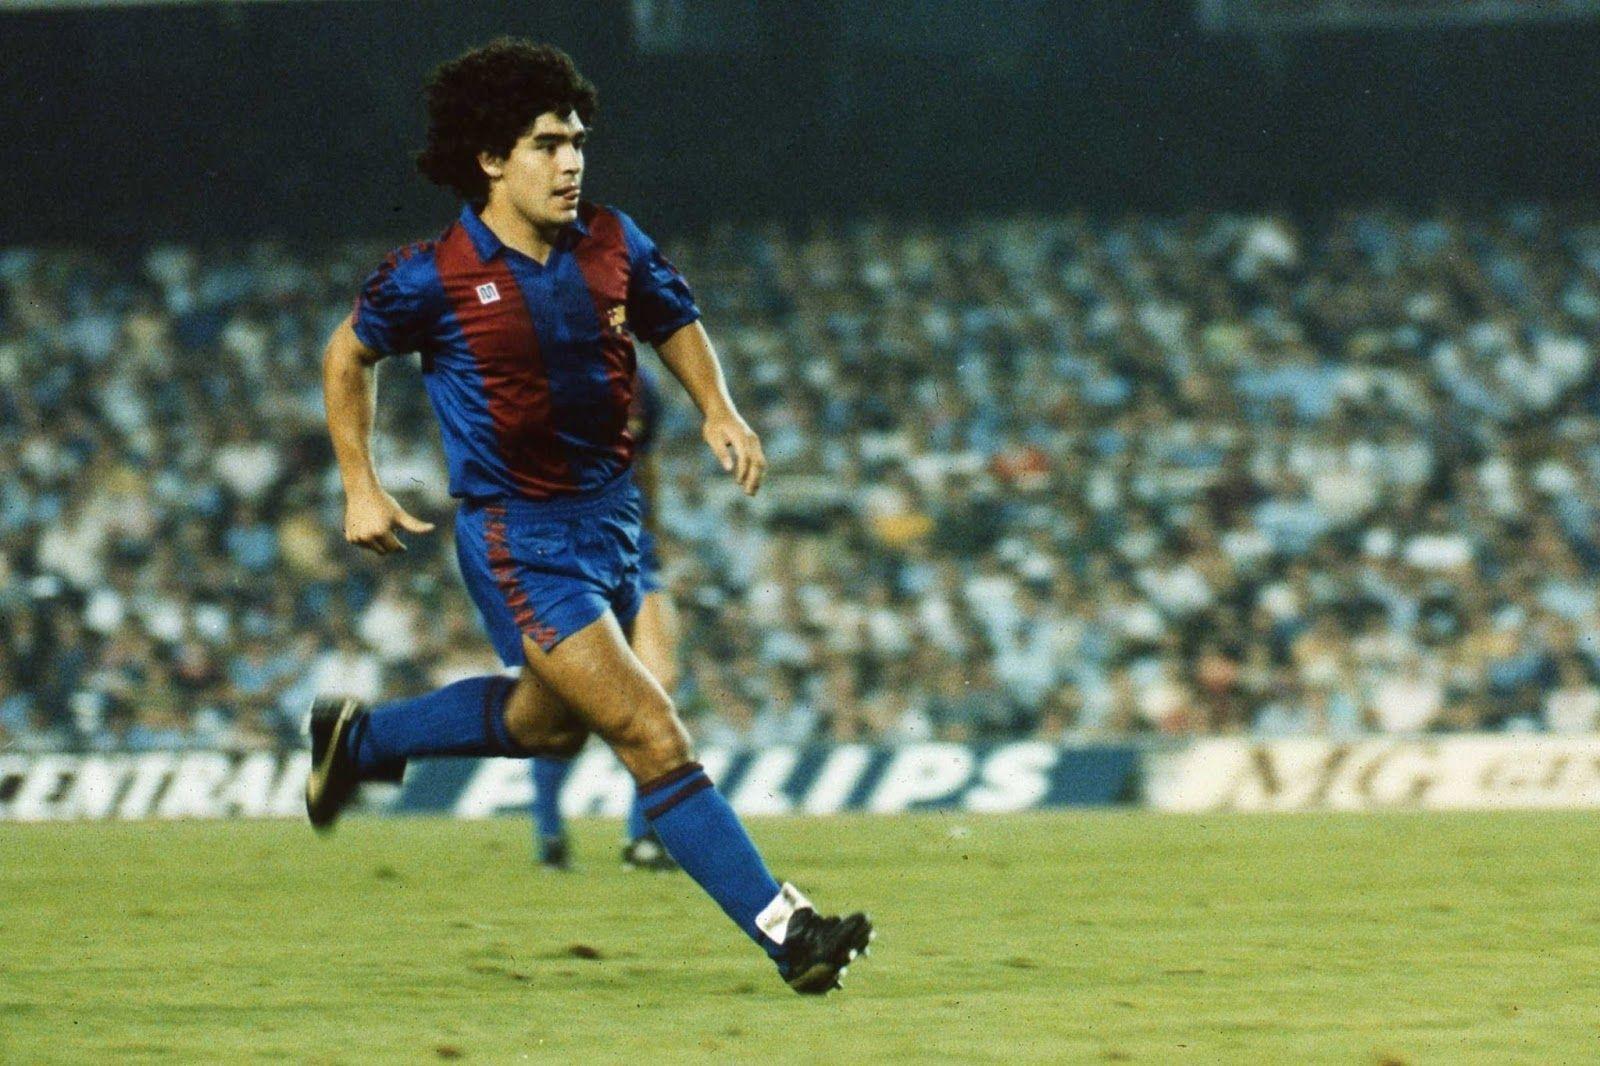 Maradona Wallpaper - NawPic  Diego maradona, Wallpaper, Pelé